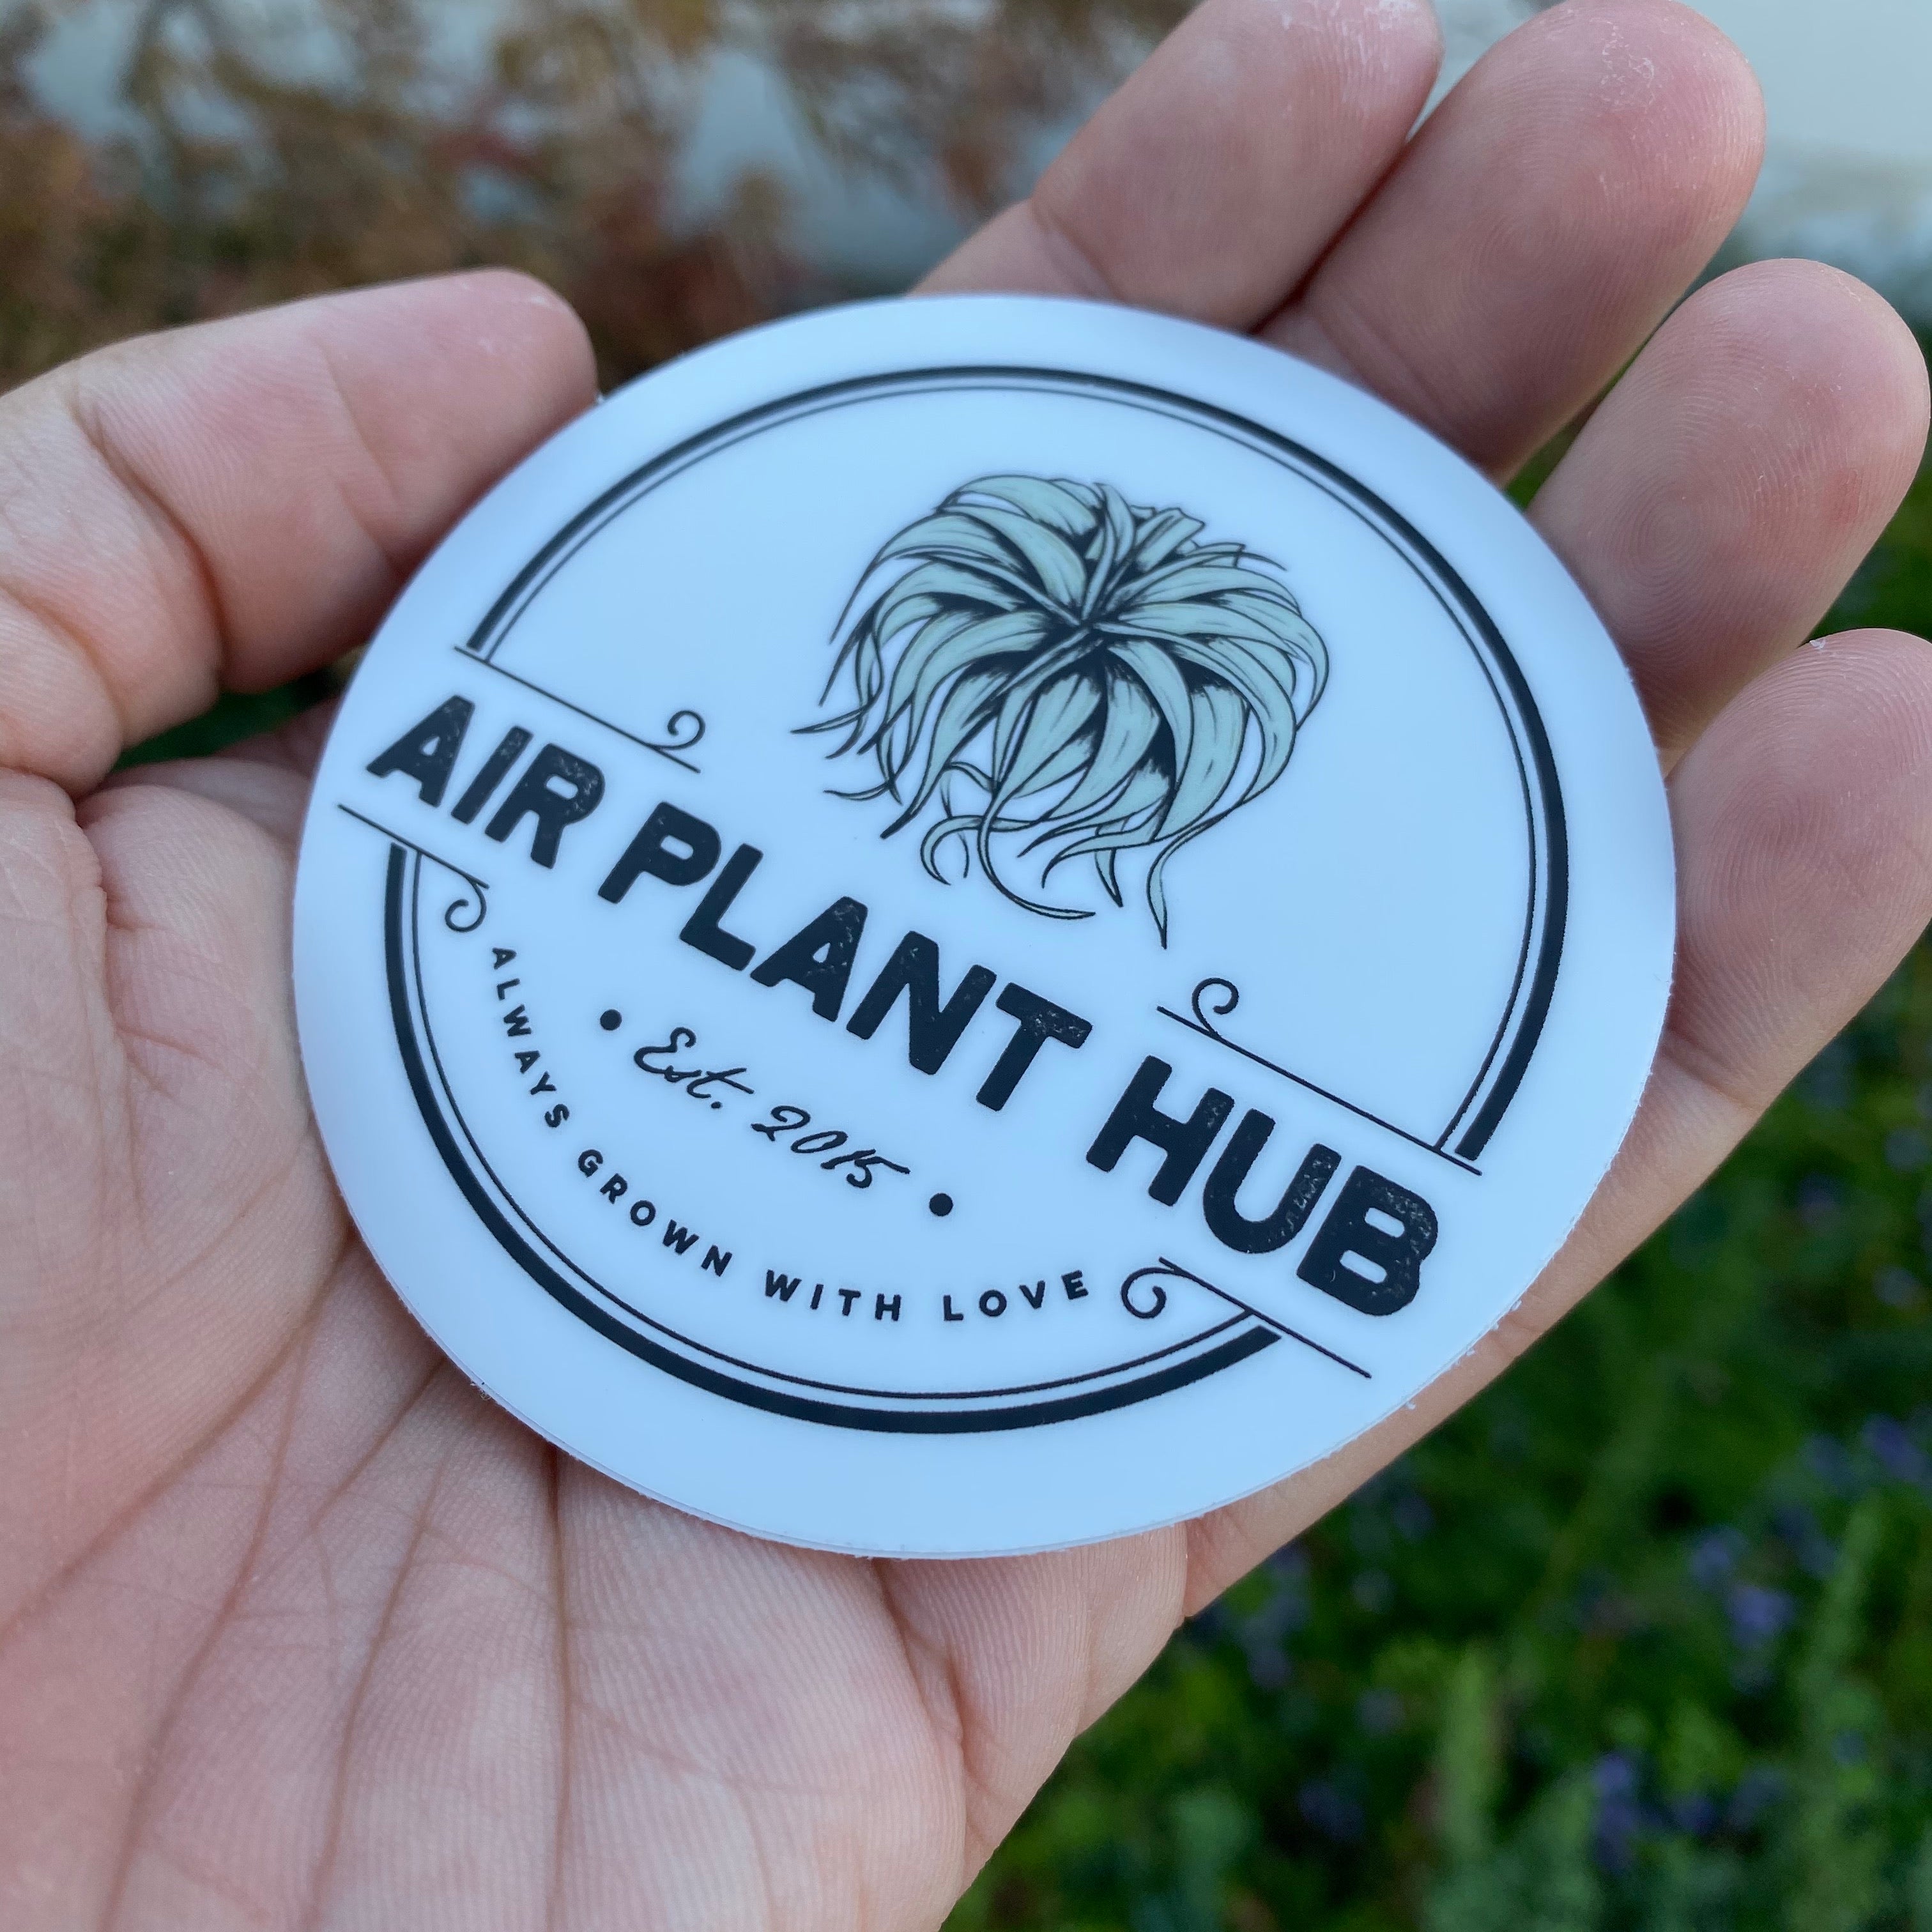 Air Plant Hub  Round Die Cut Sticker 3” x 3”